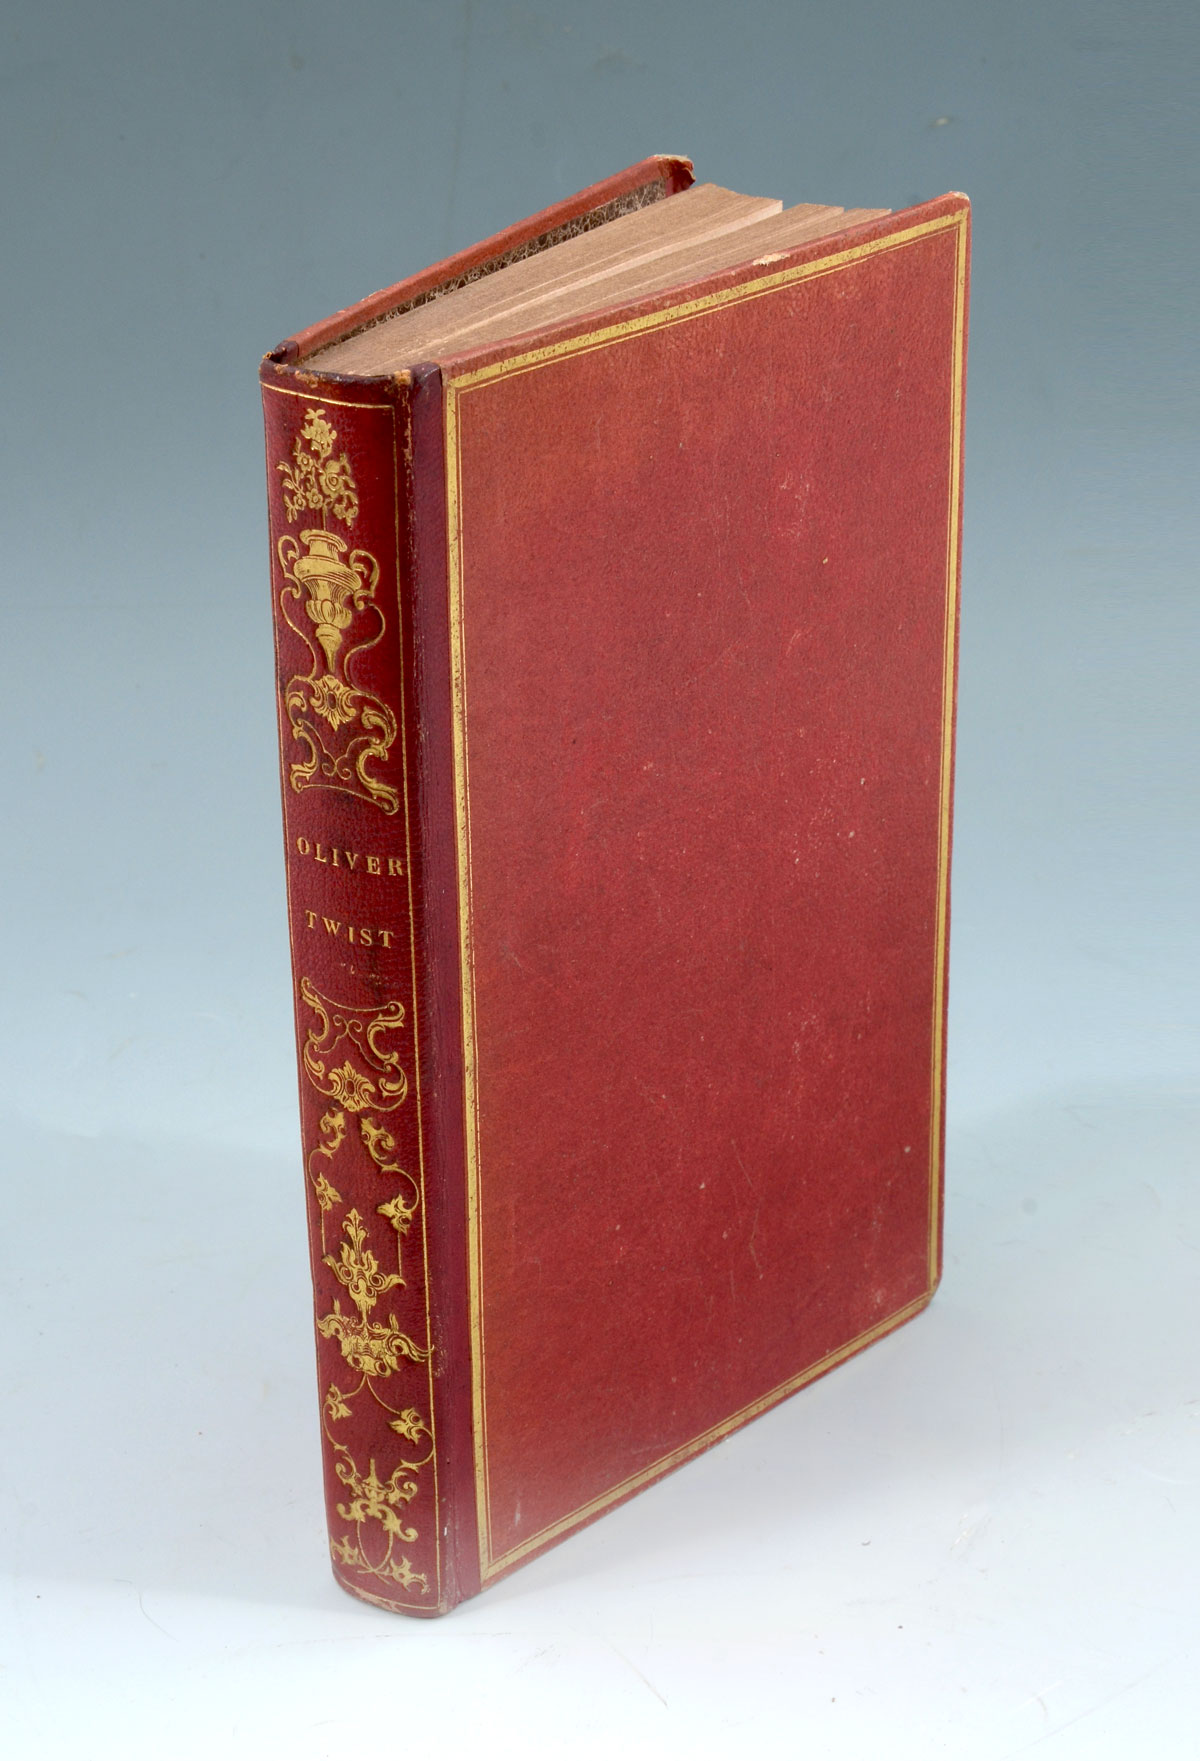 1839 OLIVER TWIST BOOK: Parisian red